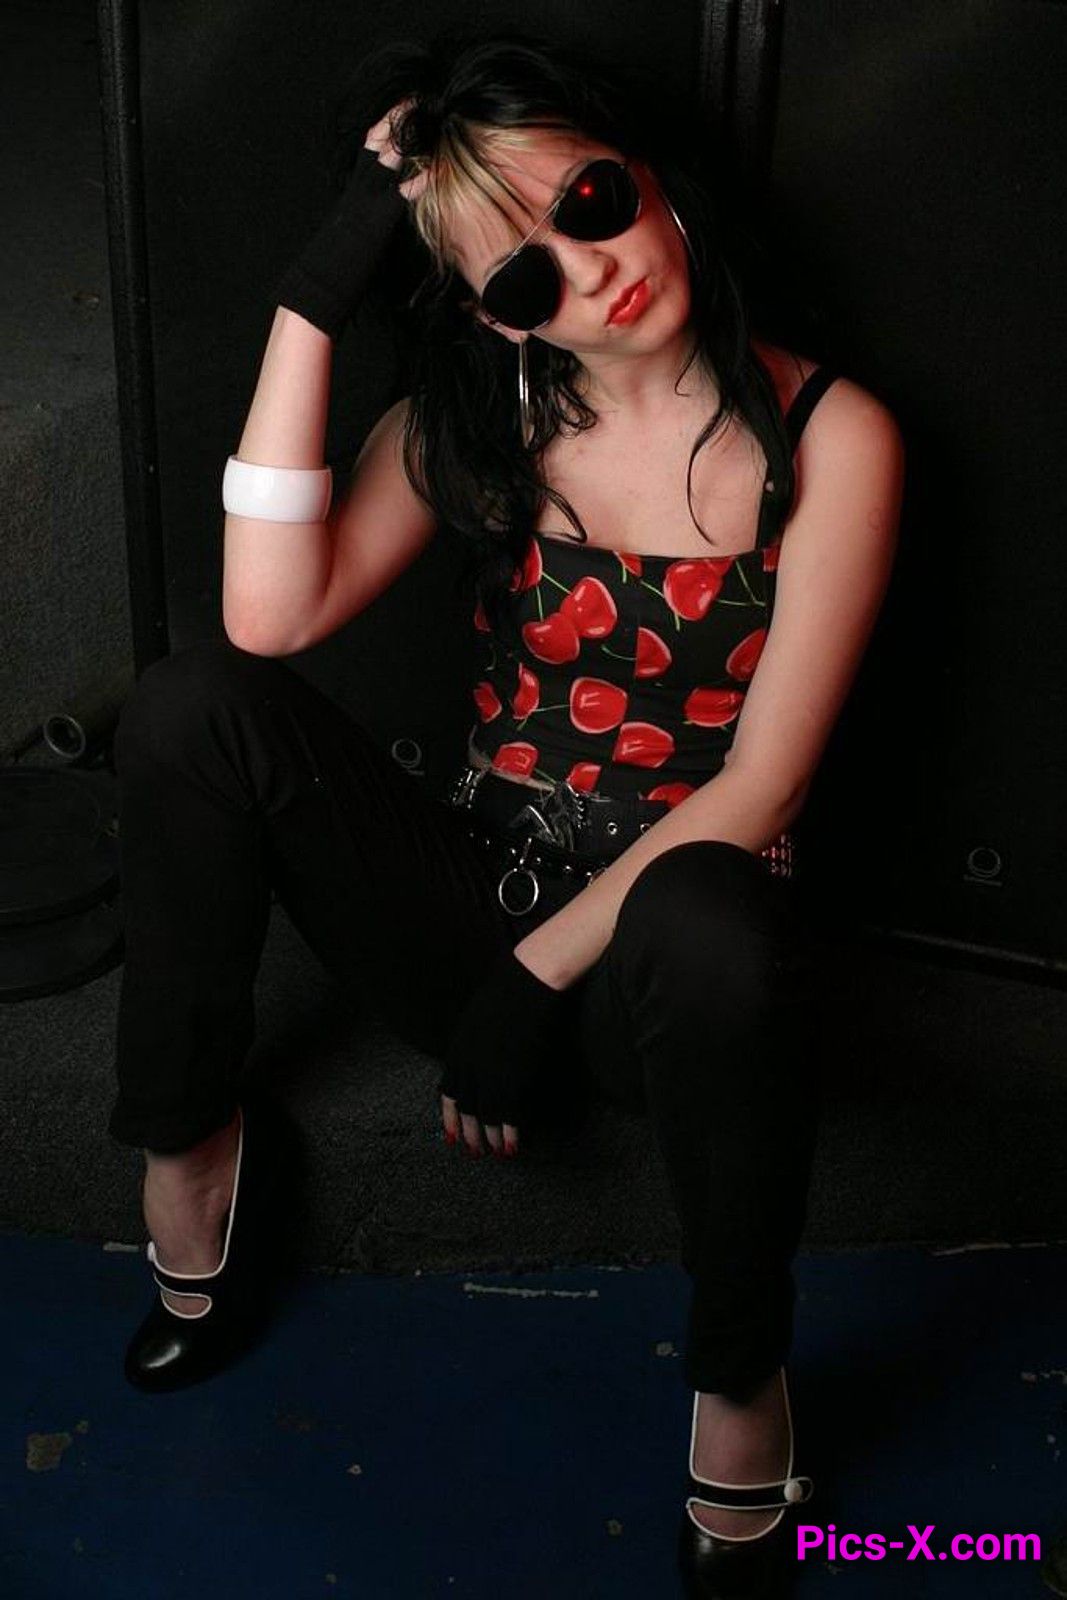 Corset wearing goth girl stripping and posing - Punk Rock Girlfriend - Image 1